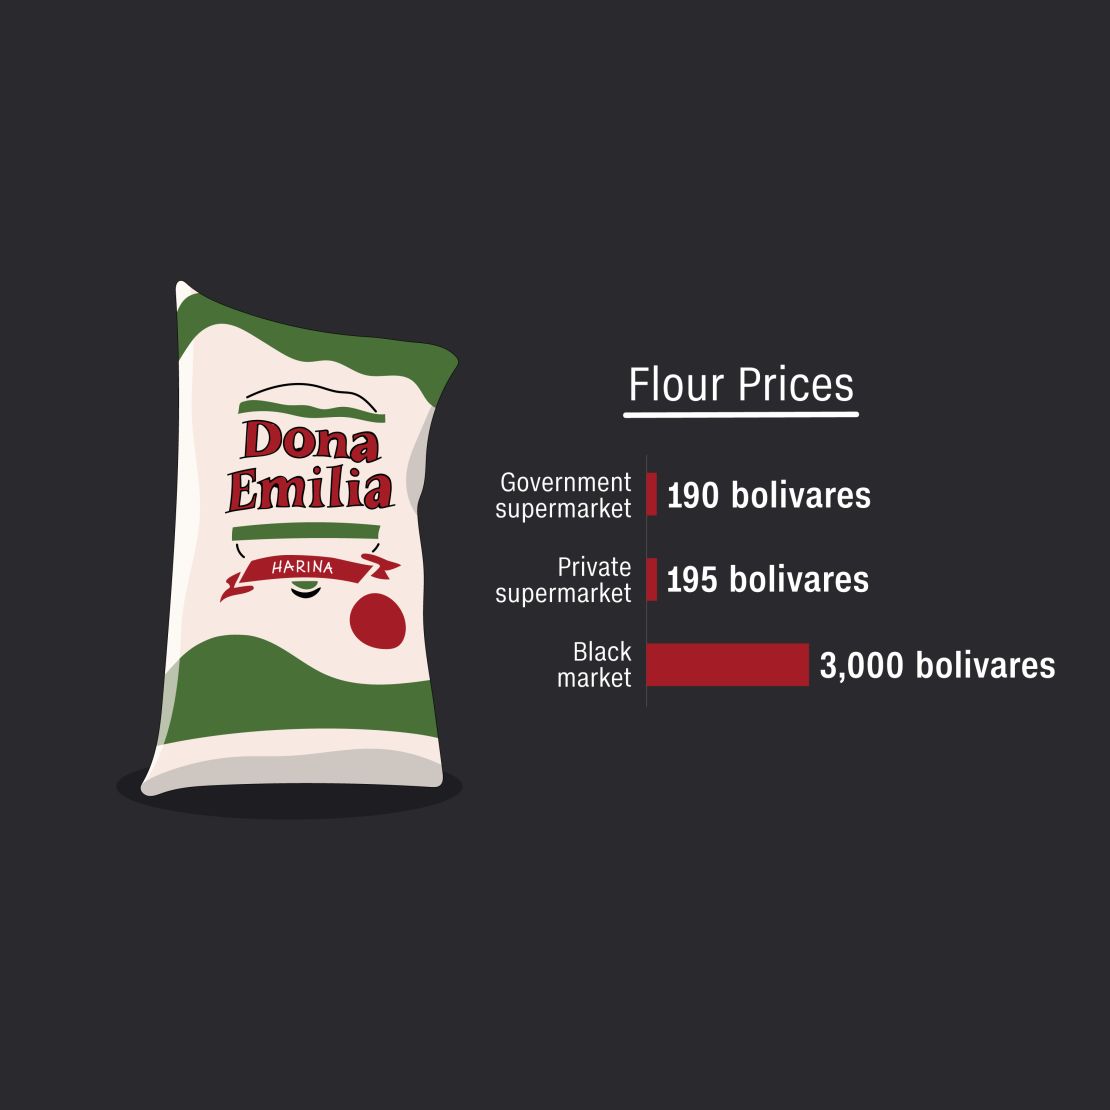 venezuelan food crisis flour